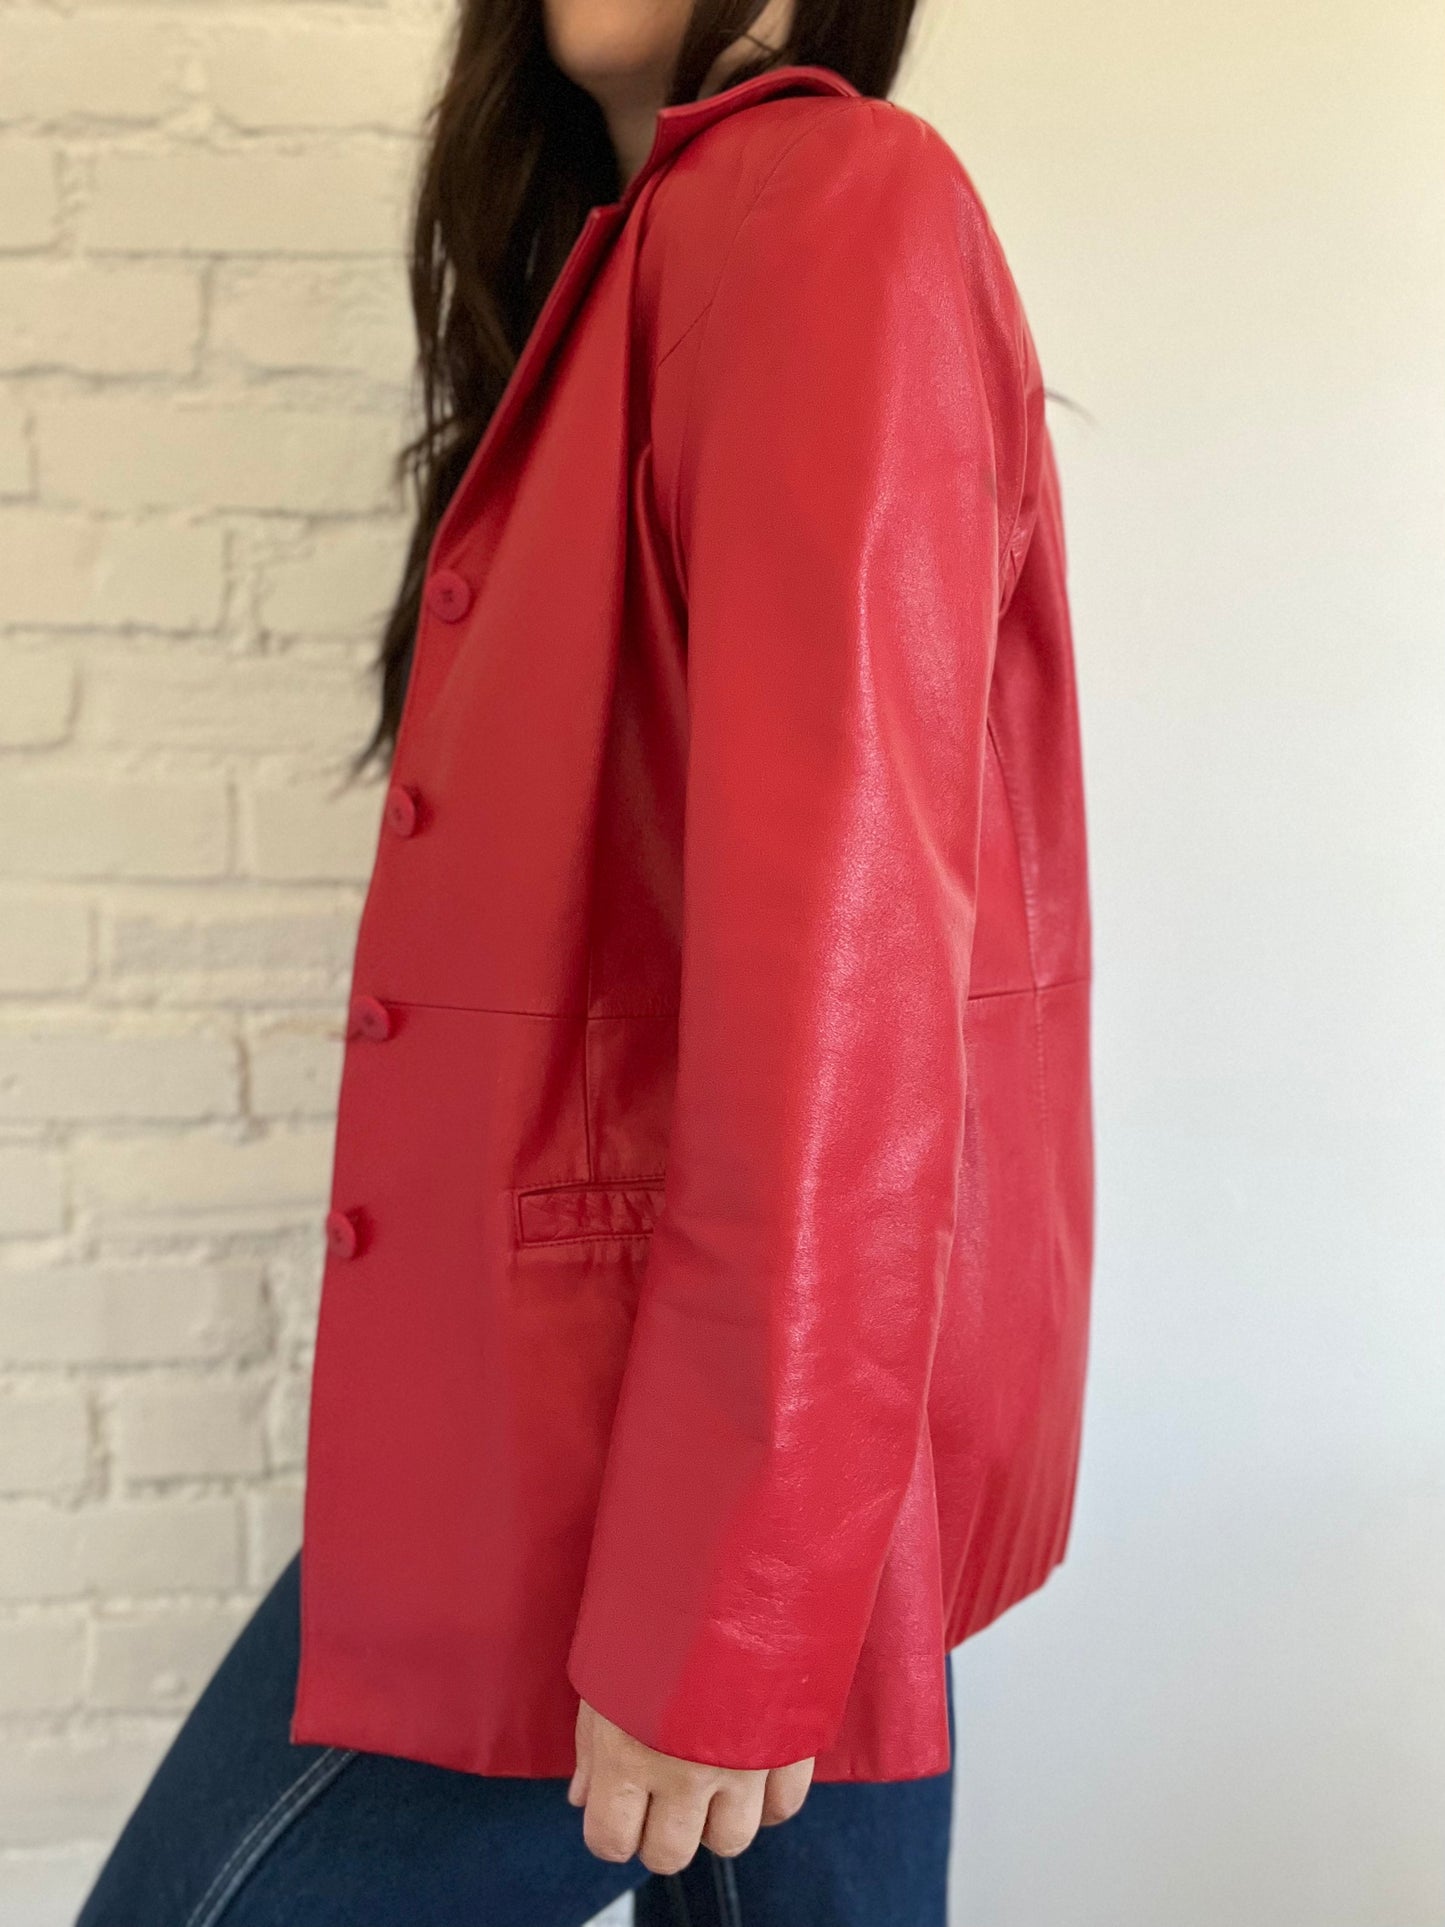 Vintage Danier Red Leather Jacket - Size M